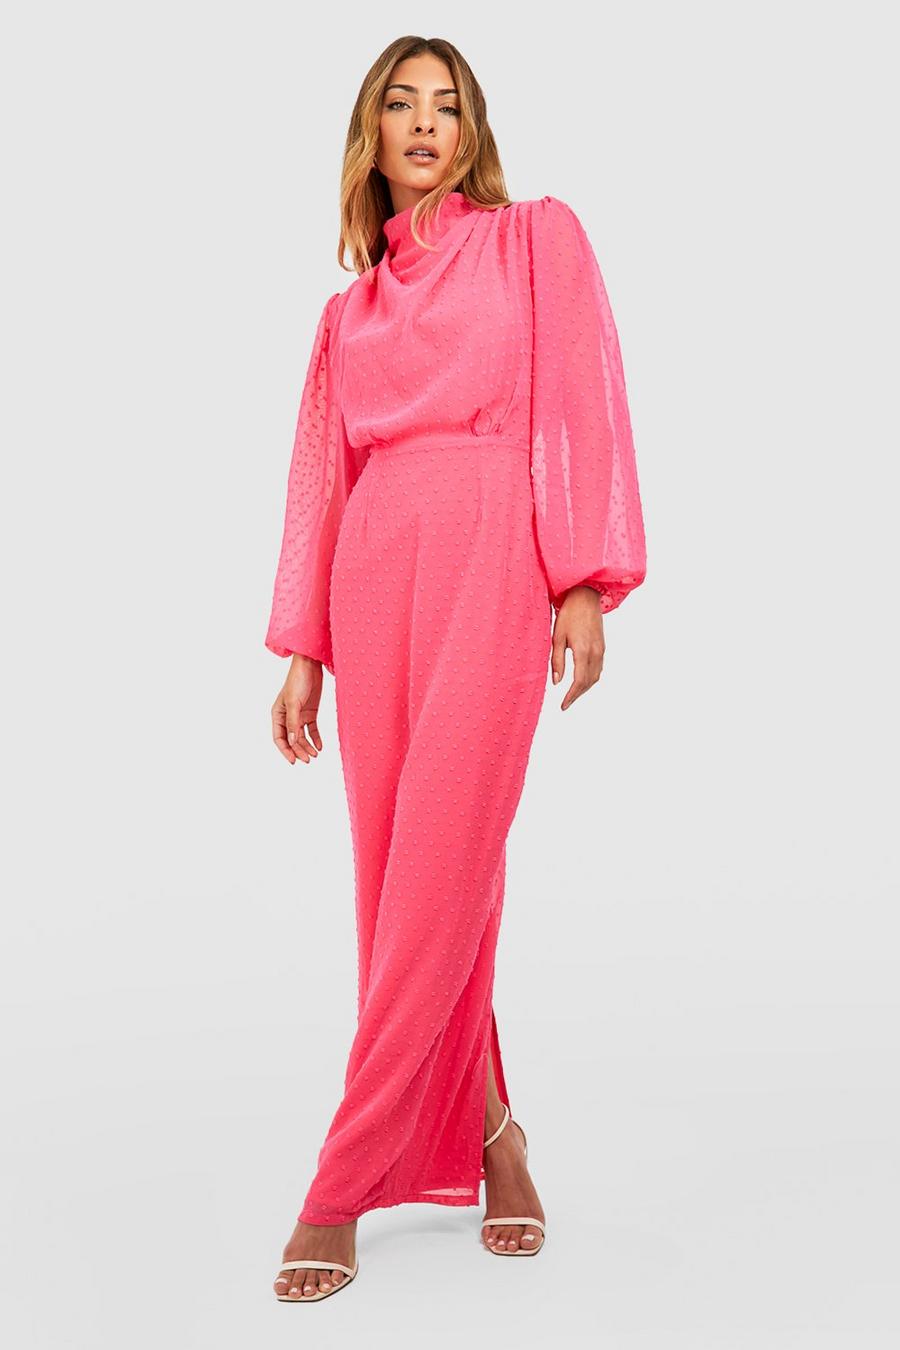 Robe longue fendue à col bénitier, Hot pink